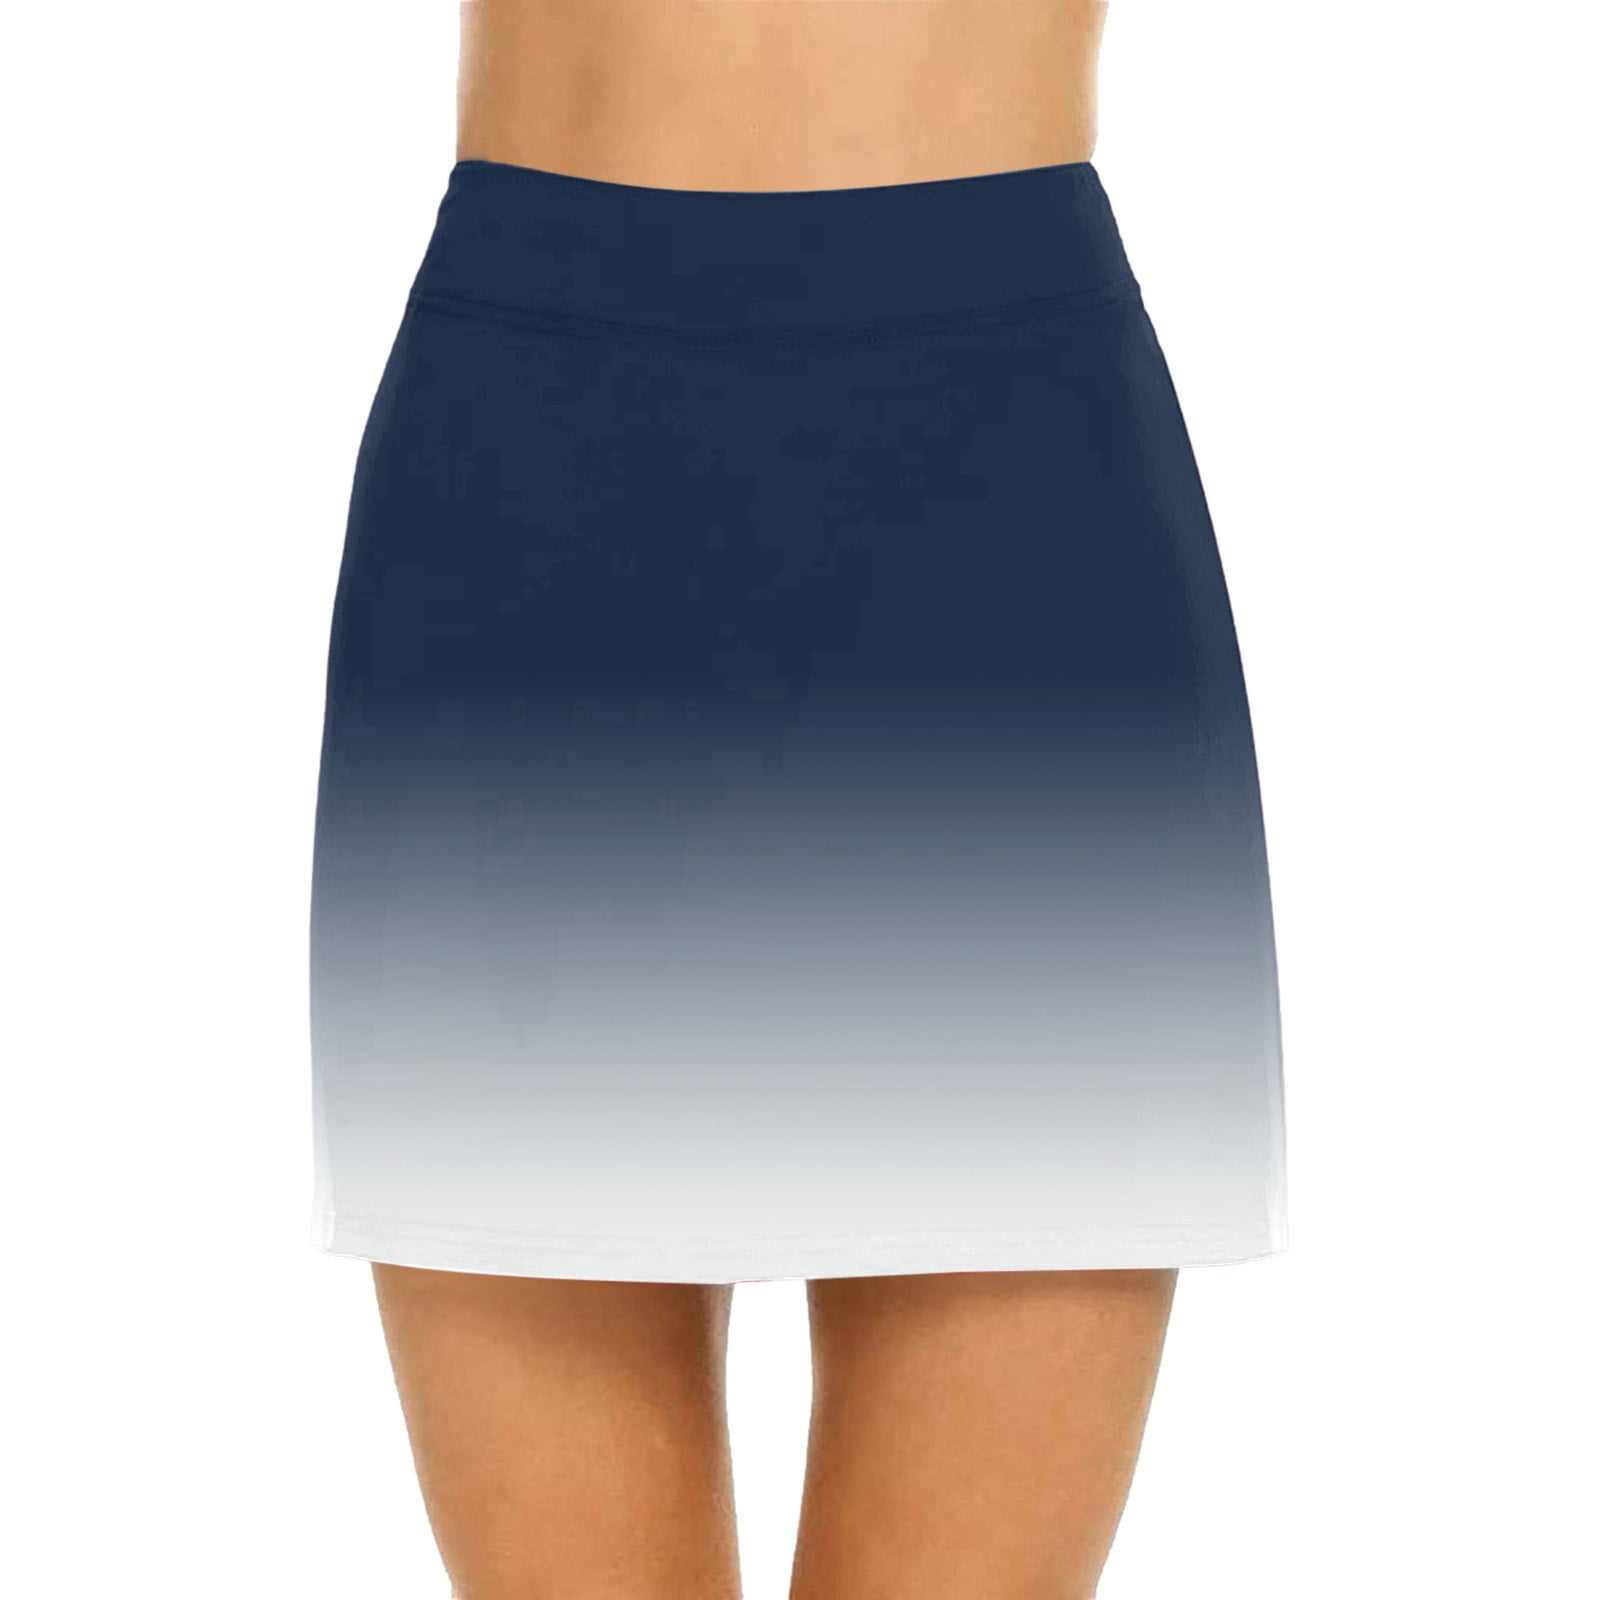 ASDYO Women's Active Performance Skort Lightweight Skirt for Running ...